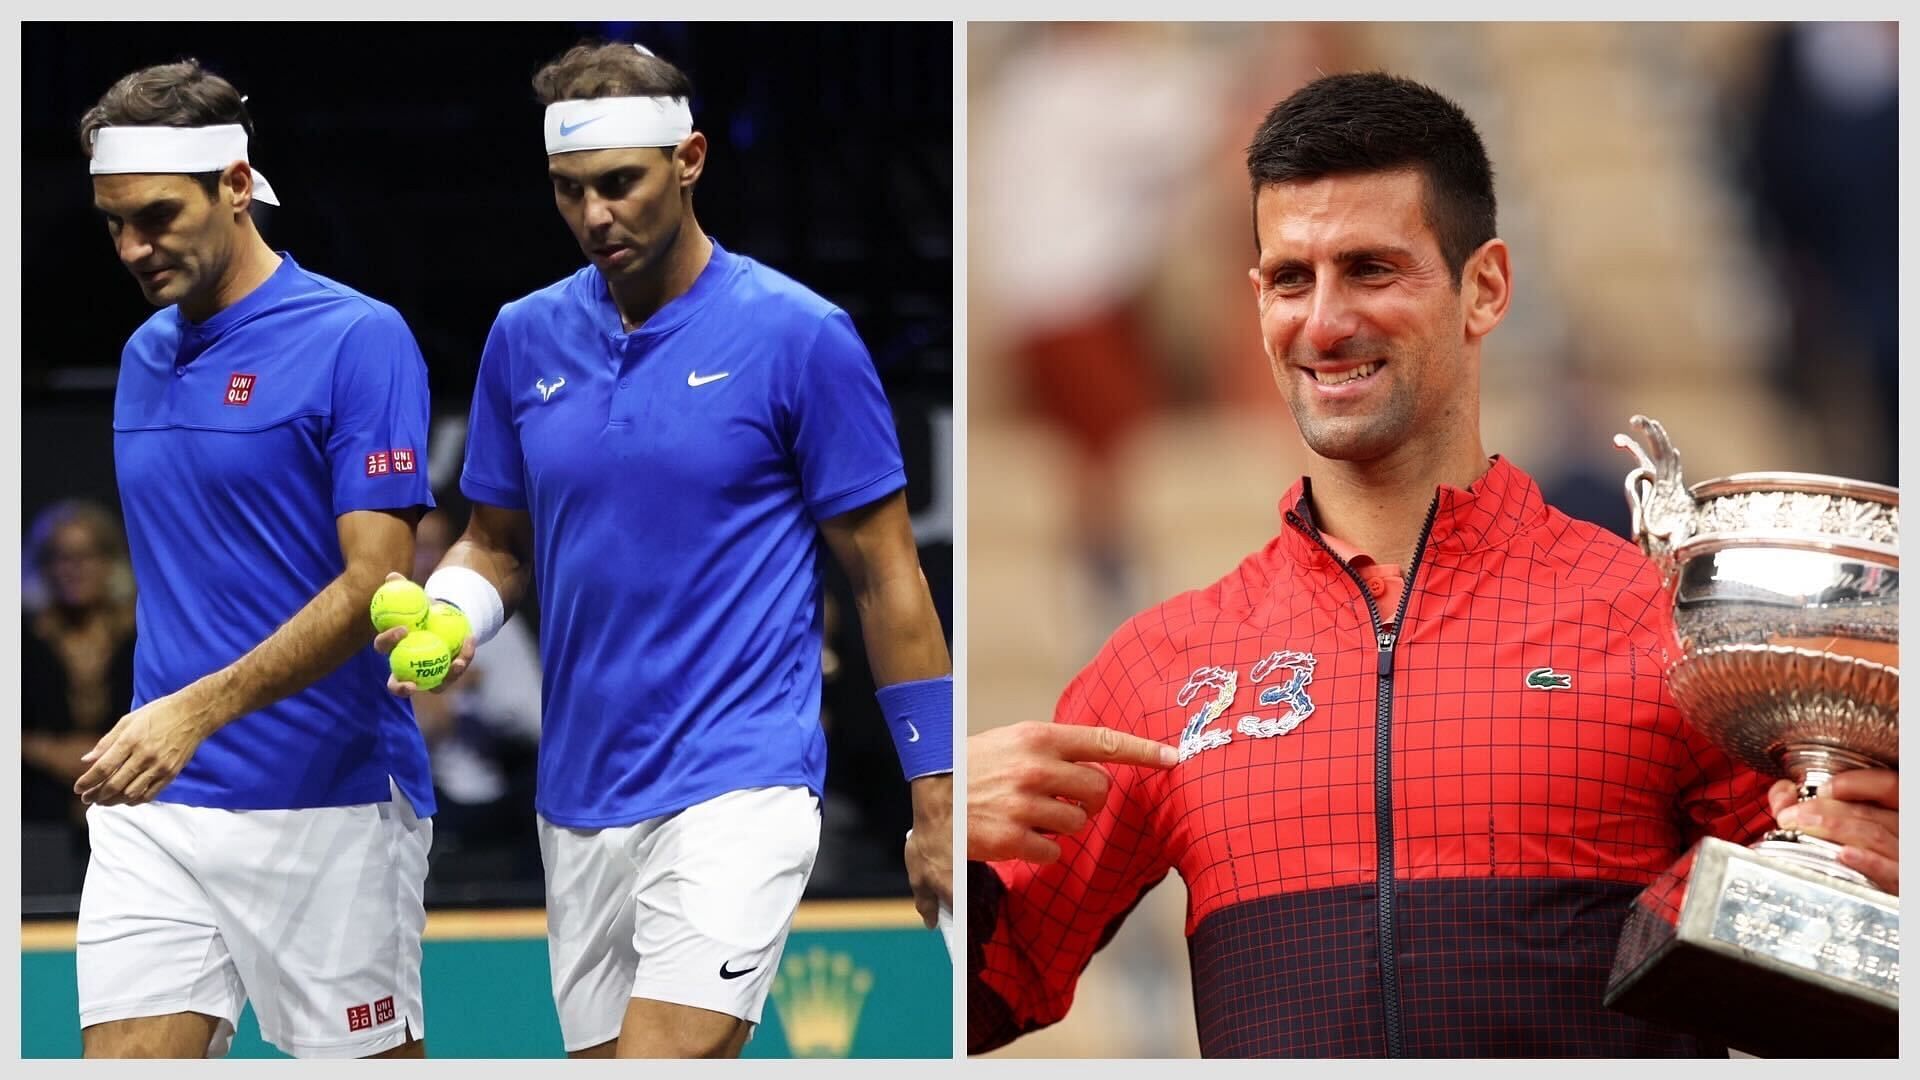 Roger Federer, Rafael Nadal and Novak Djokovic have won a combined 65 Grand Slam titles.